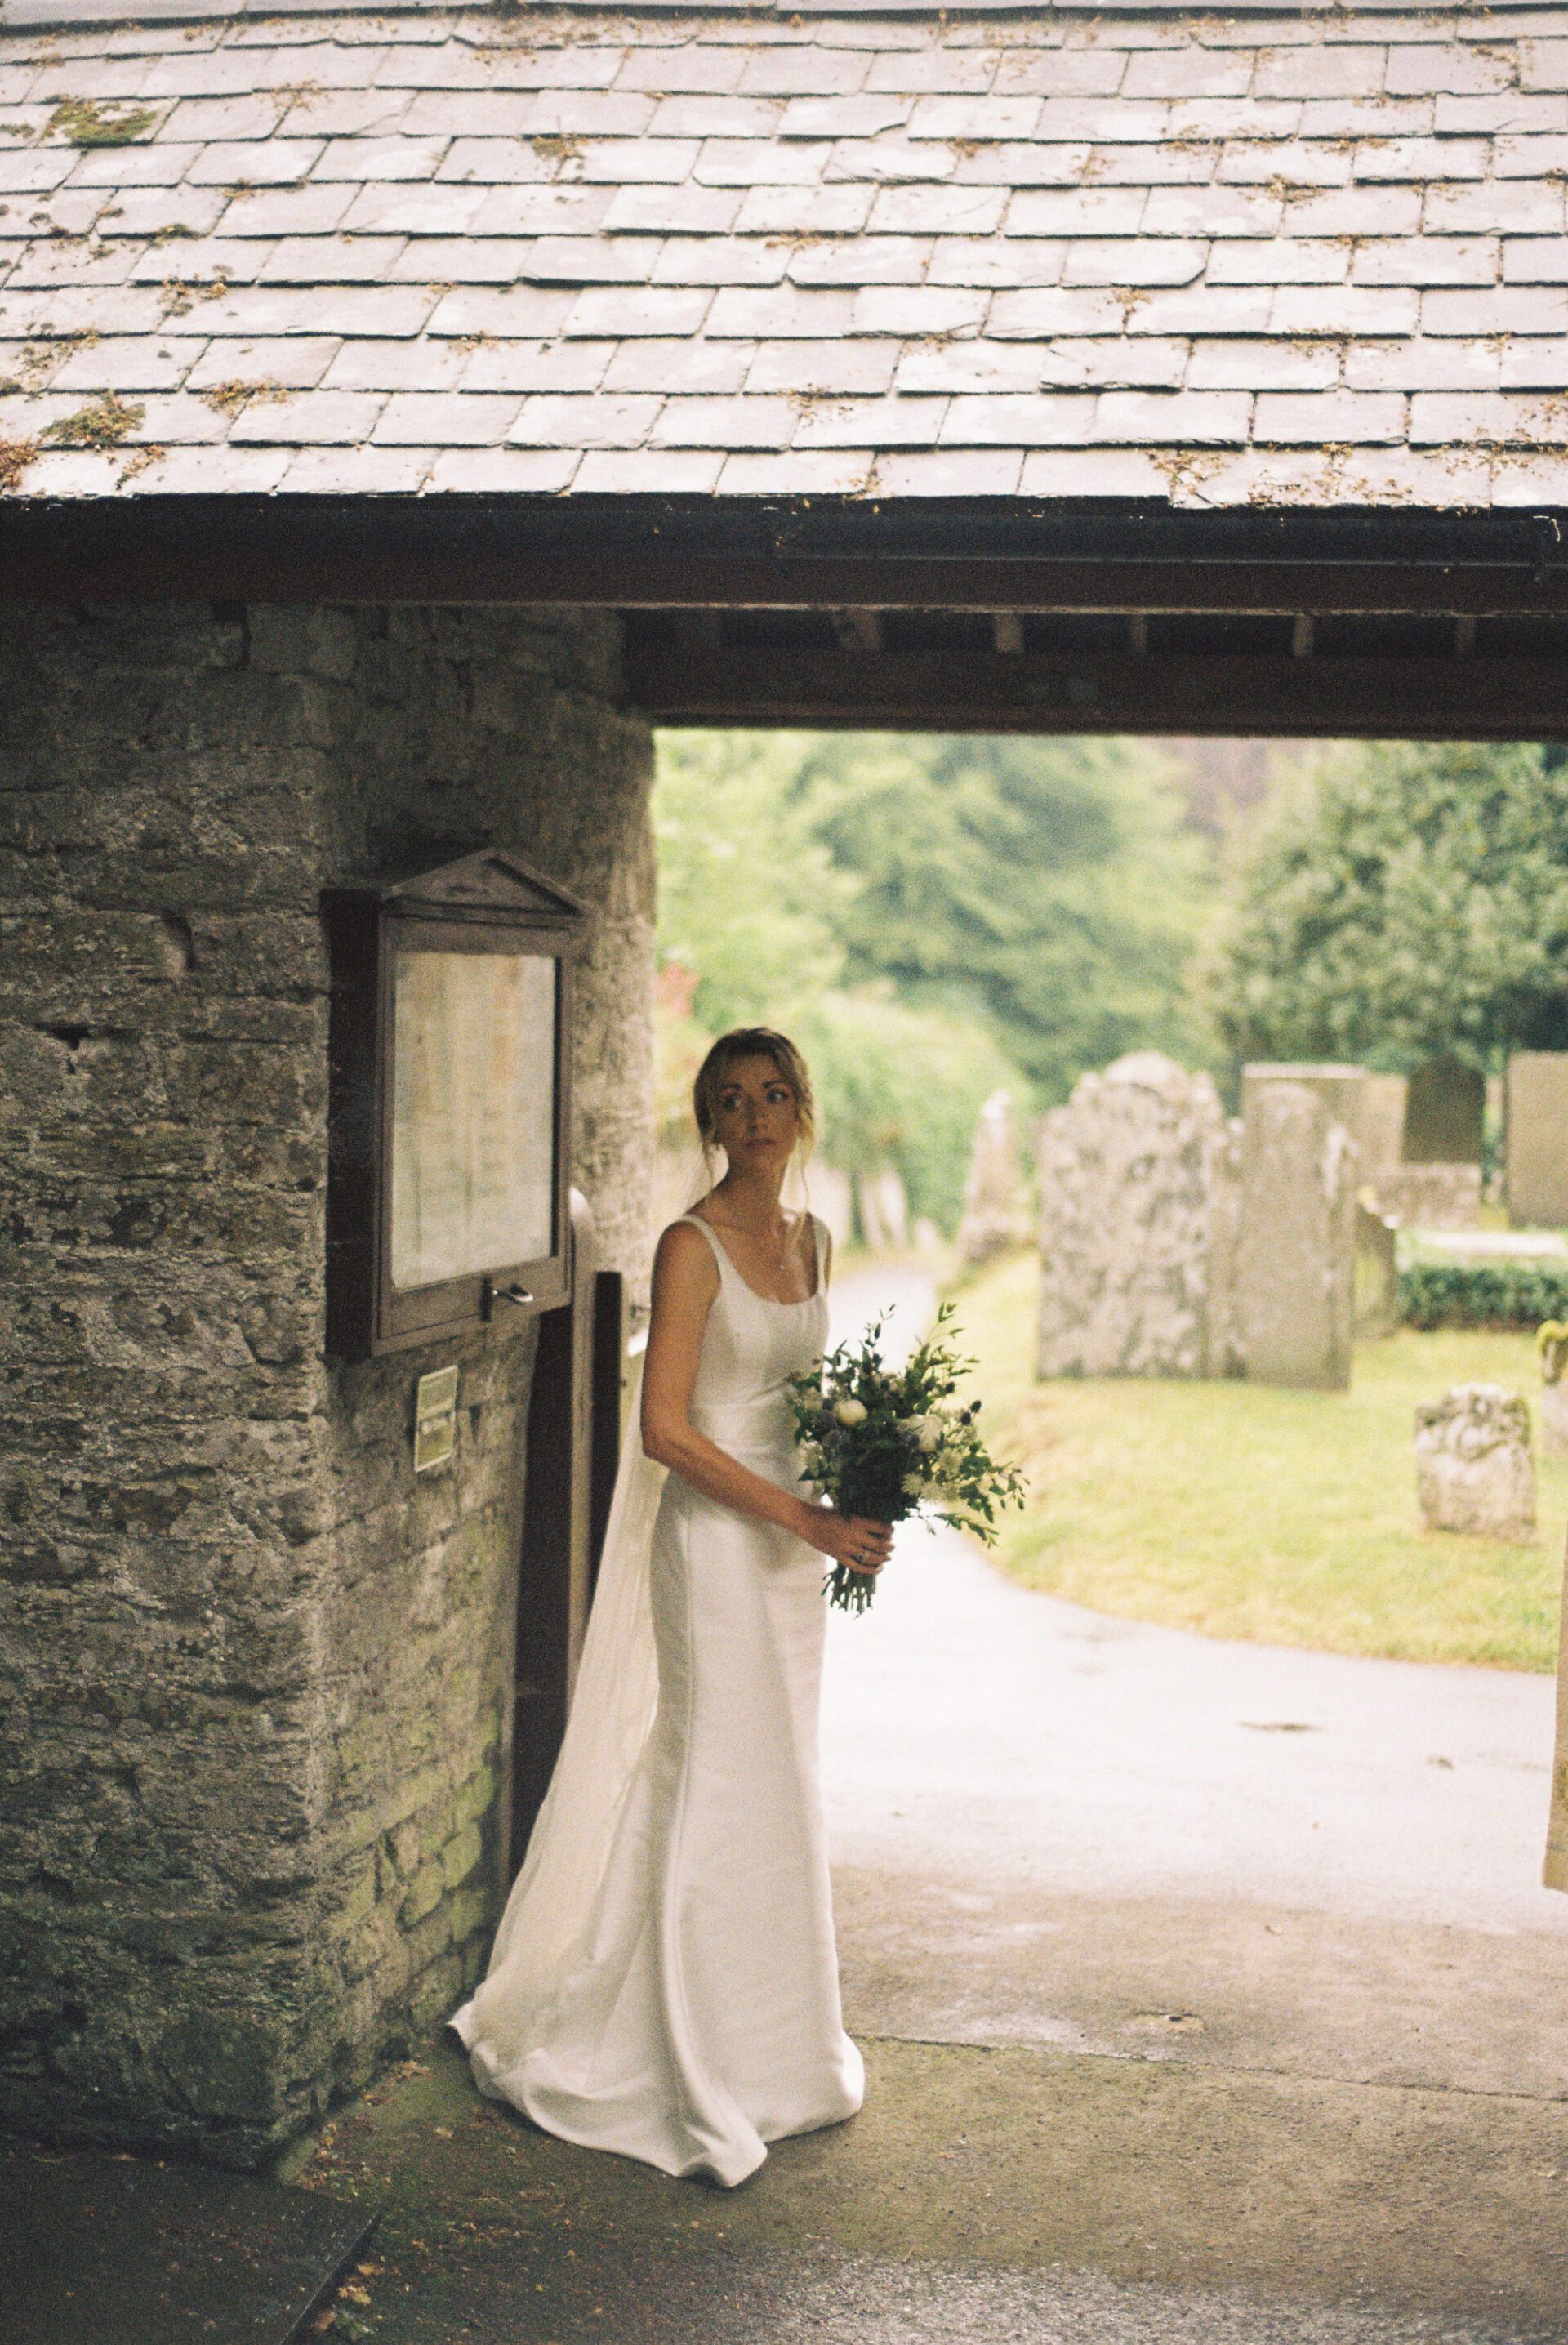 The bride is captured on 35mm film before the Devon church wedding ceremony